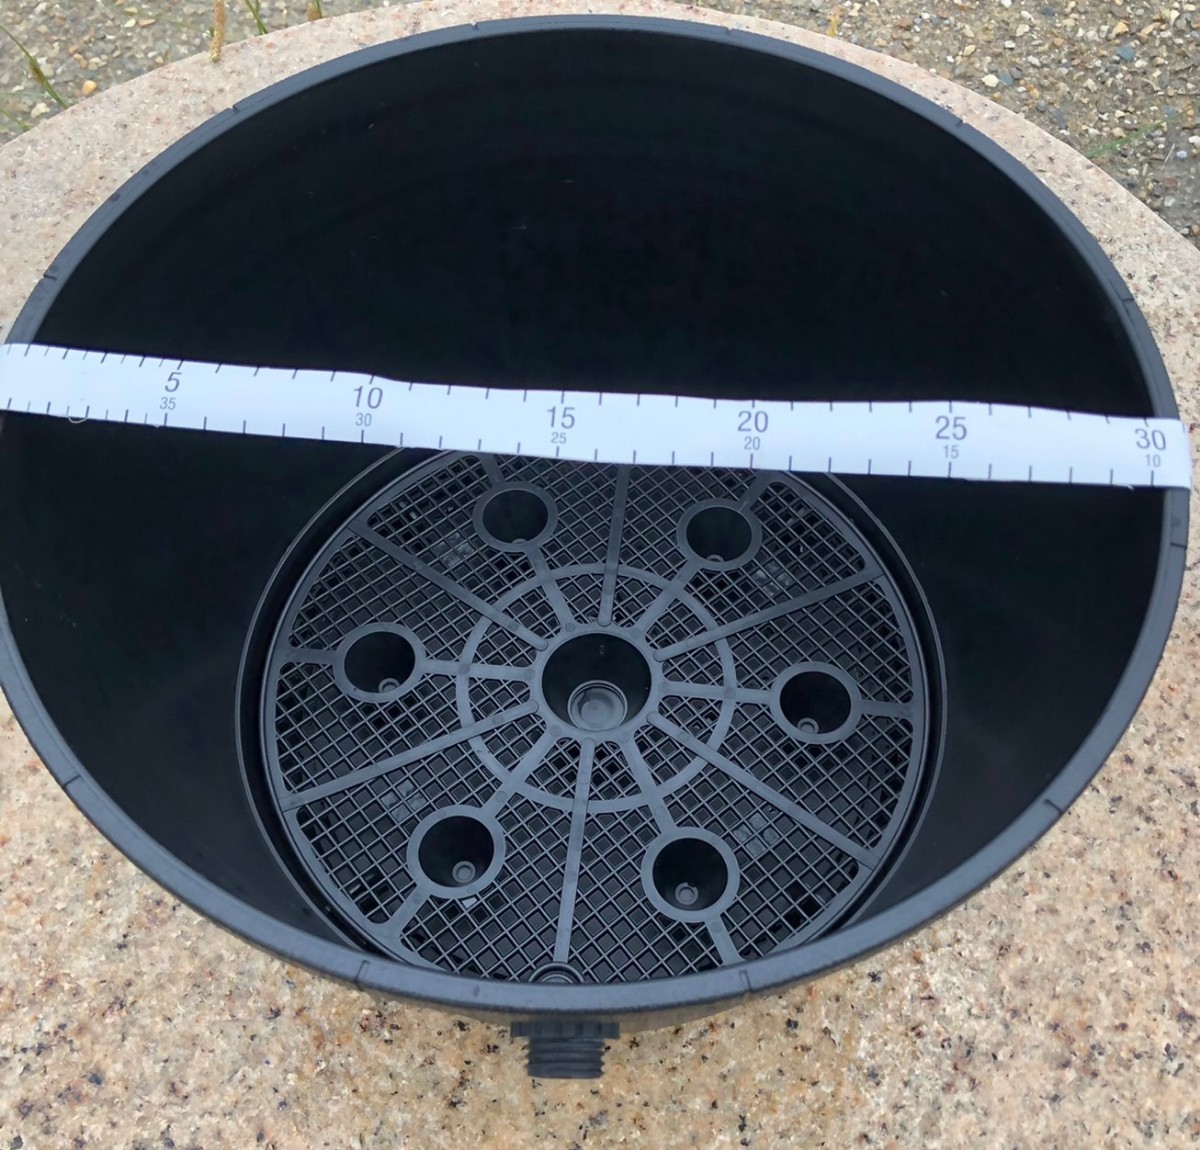  front door biotope optimum! Smart valve overflow measures ending water lily pot [ large, small ] black 2 piece set!